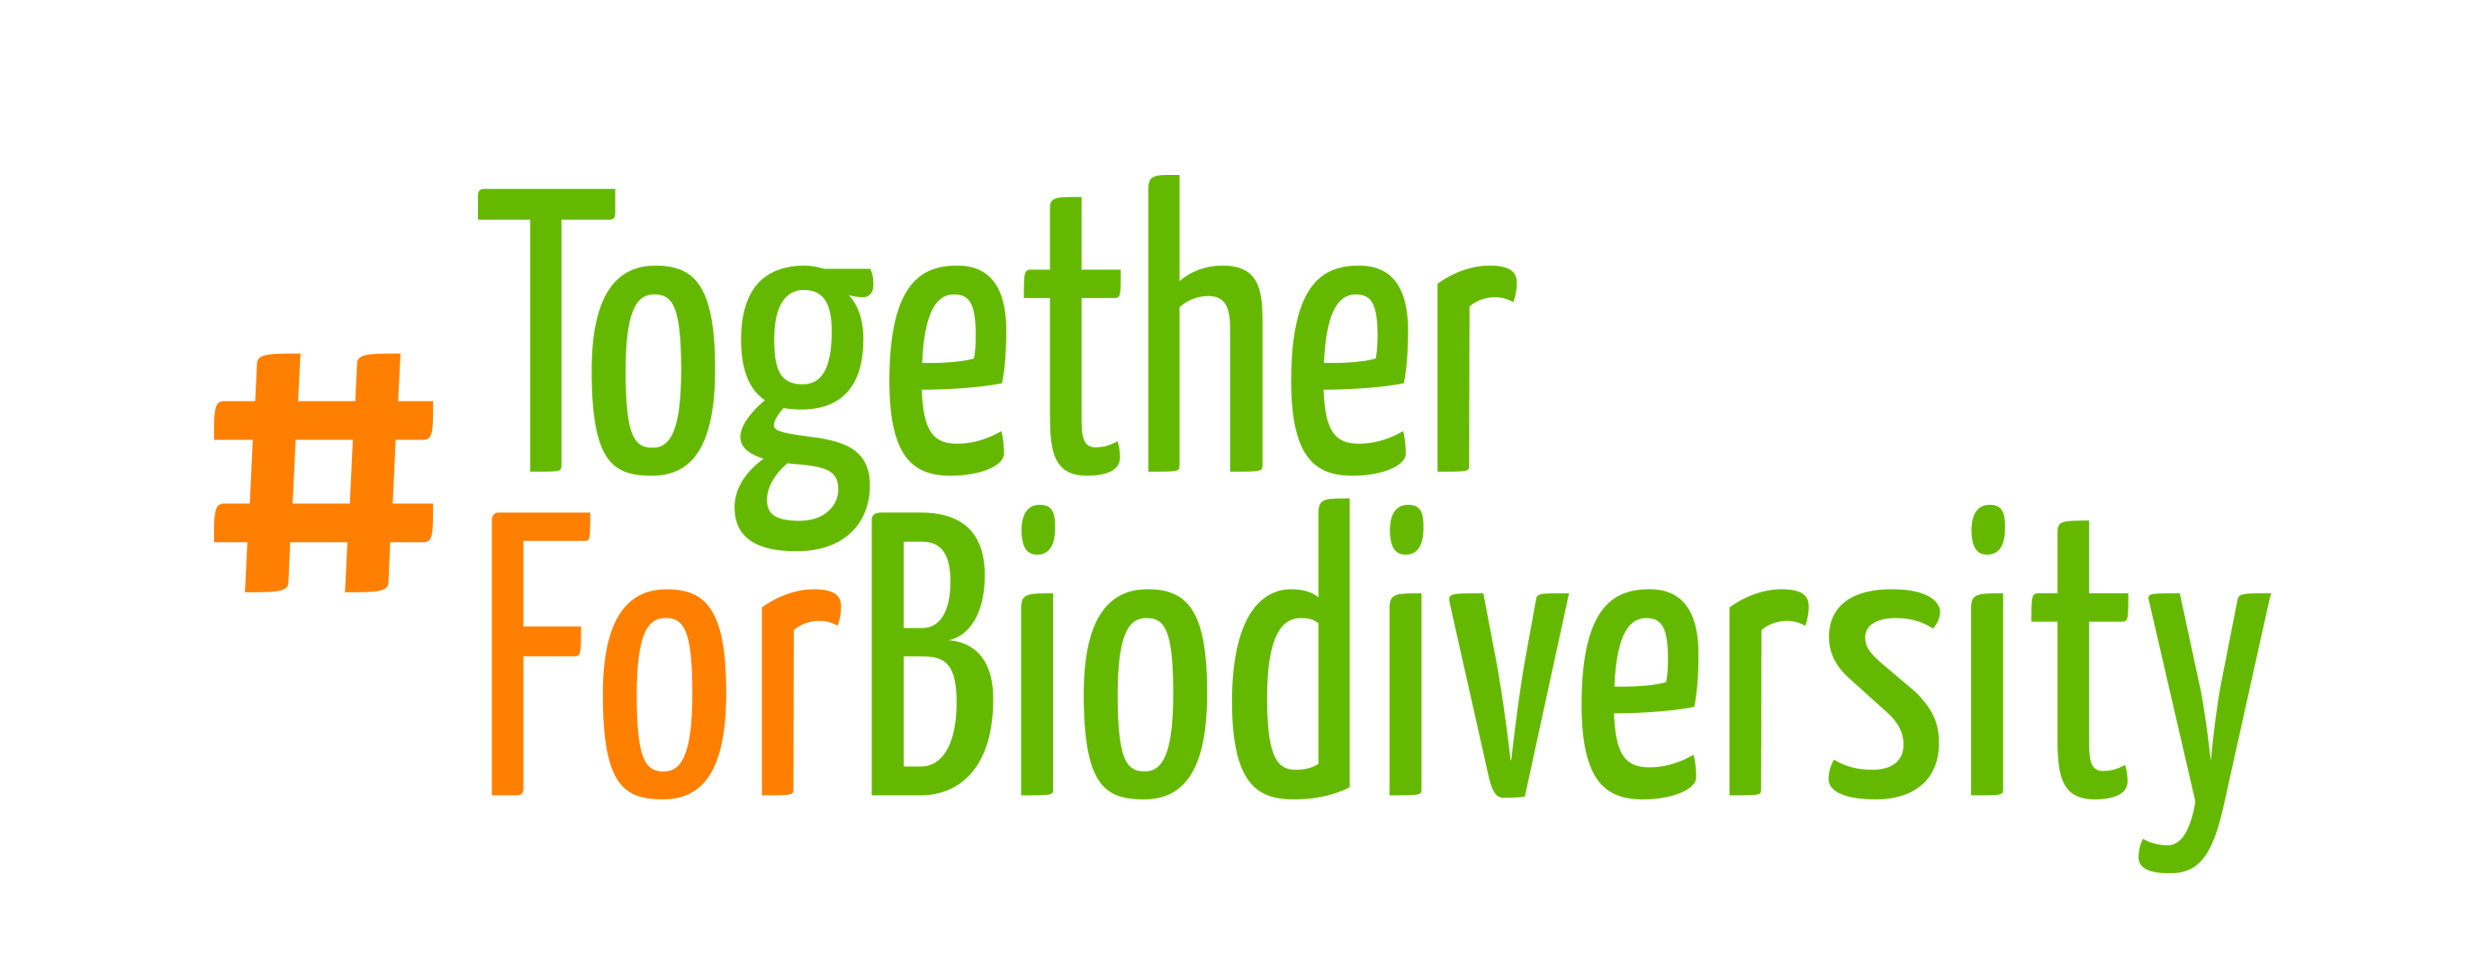 hashtag biodiv EN